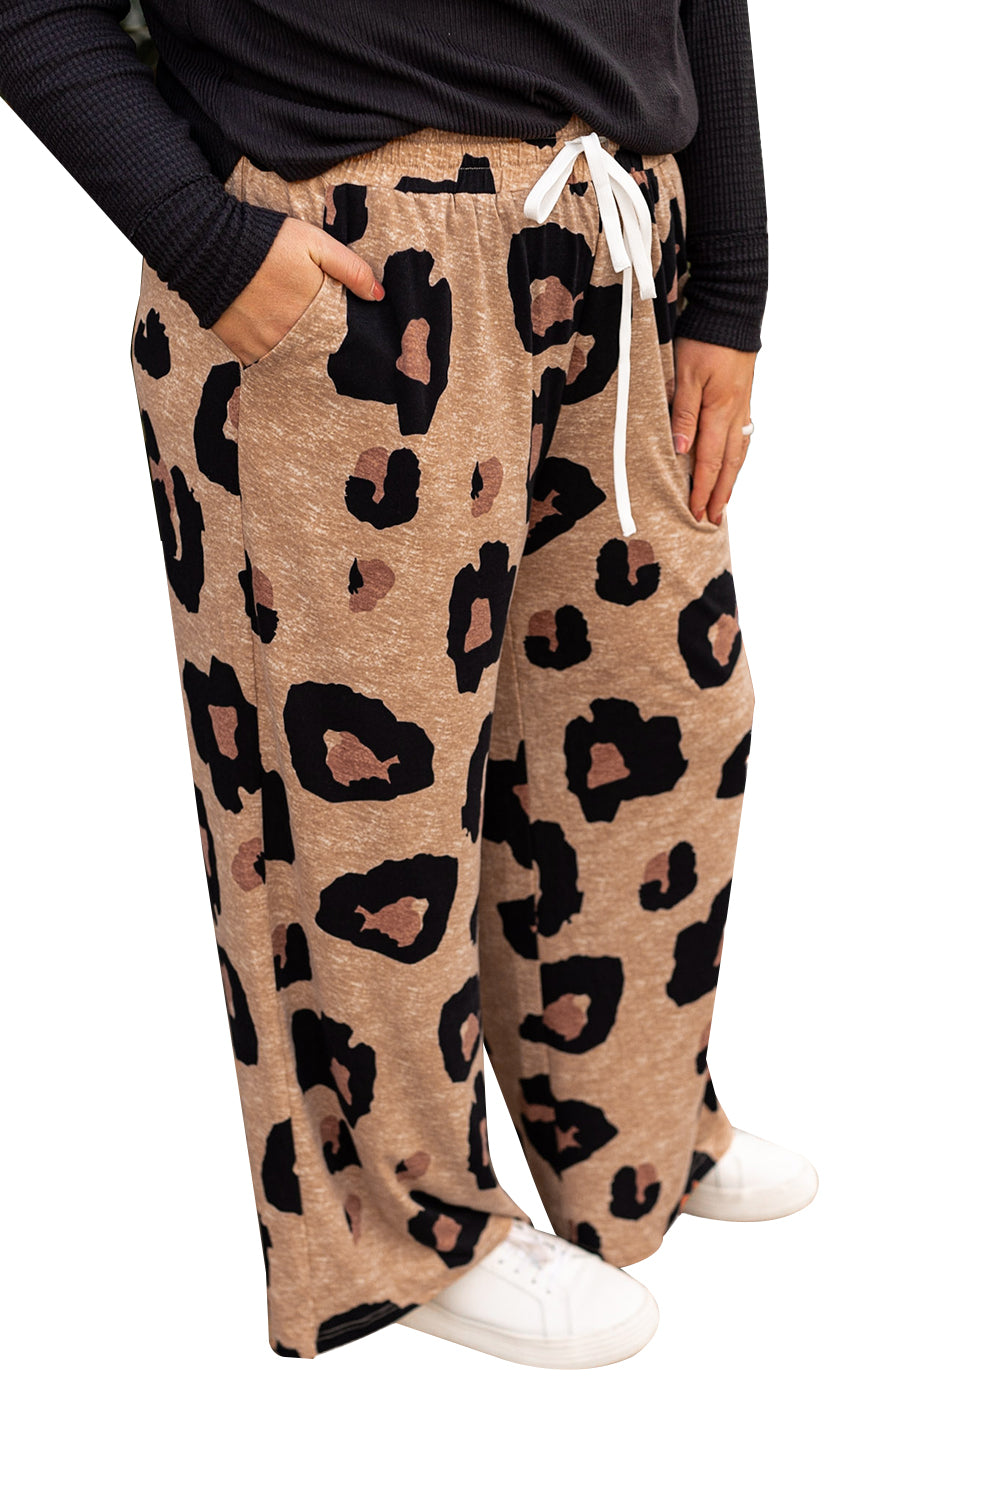 Light French Beige Leopard Print Drawstring Wide Leg Plus Size Lounge Pants